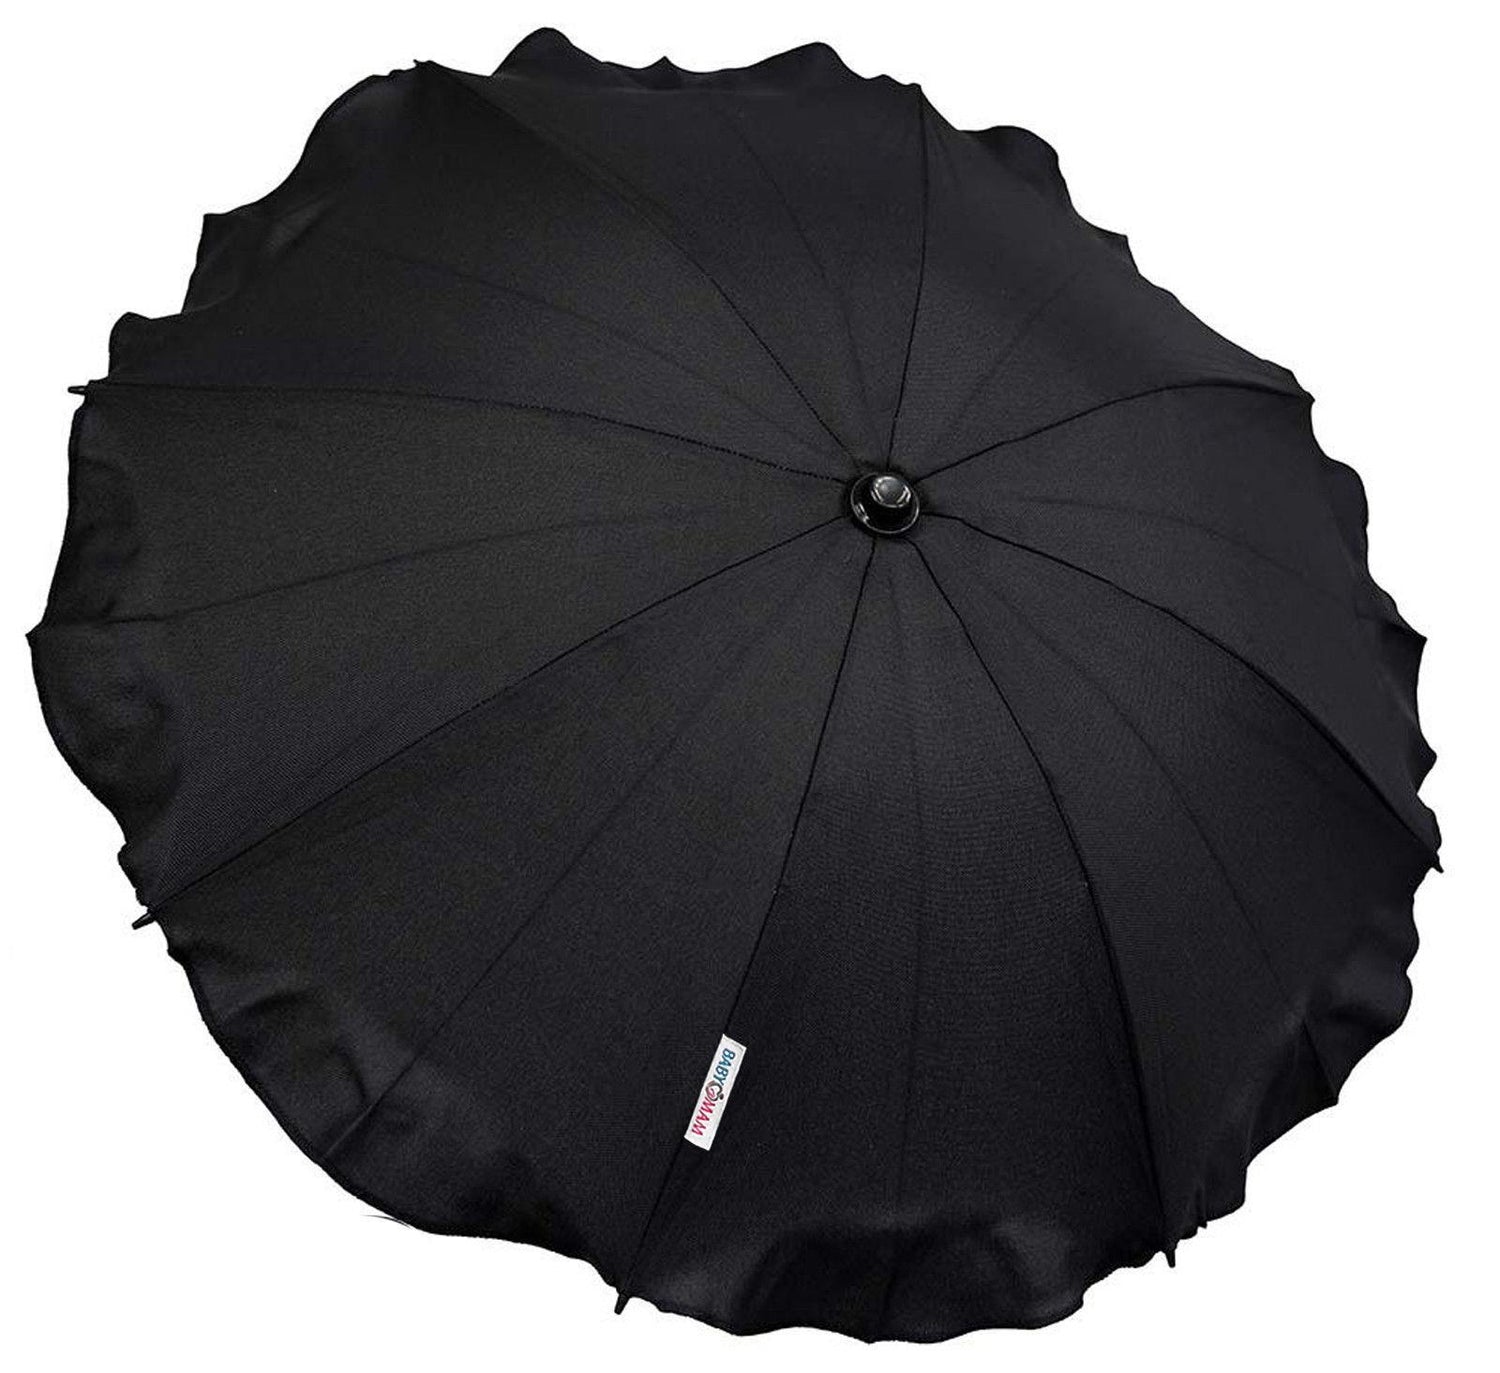 Baby Parasol Universal Sun Umbrella Pram Stroller Canopy Protect From Sun Rain Black